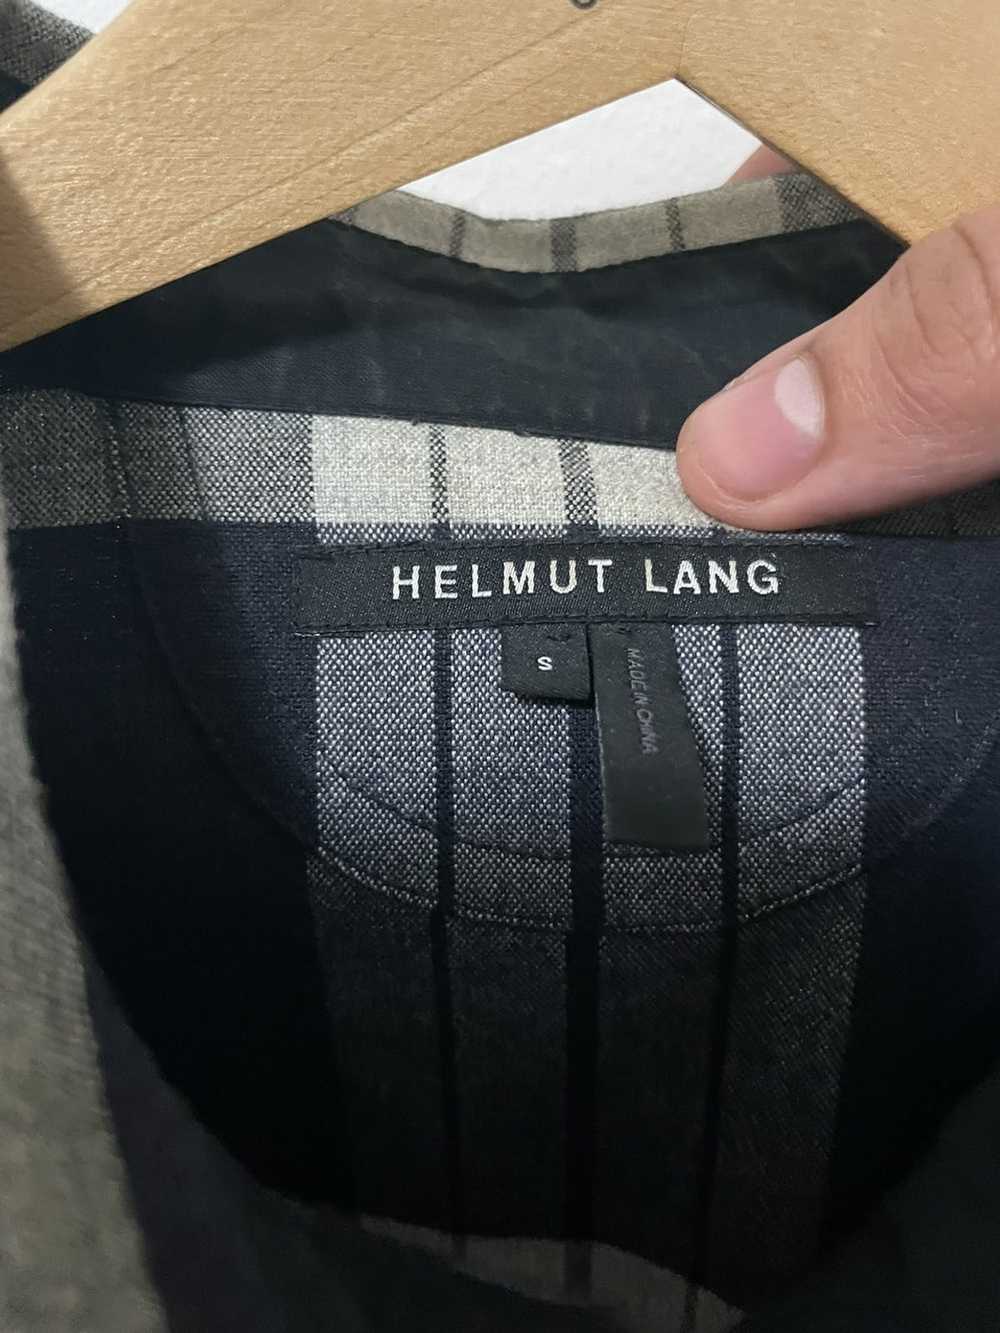 Helmut Lang Helmut Lang - image 2